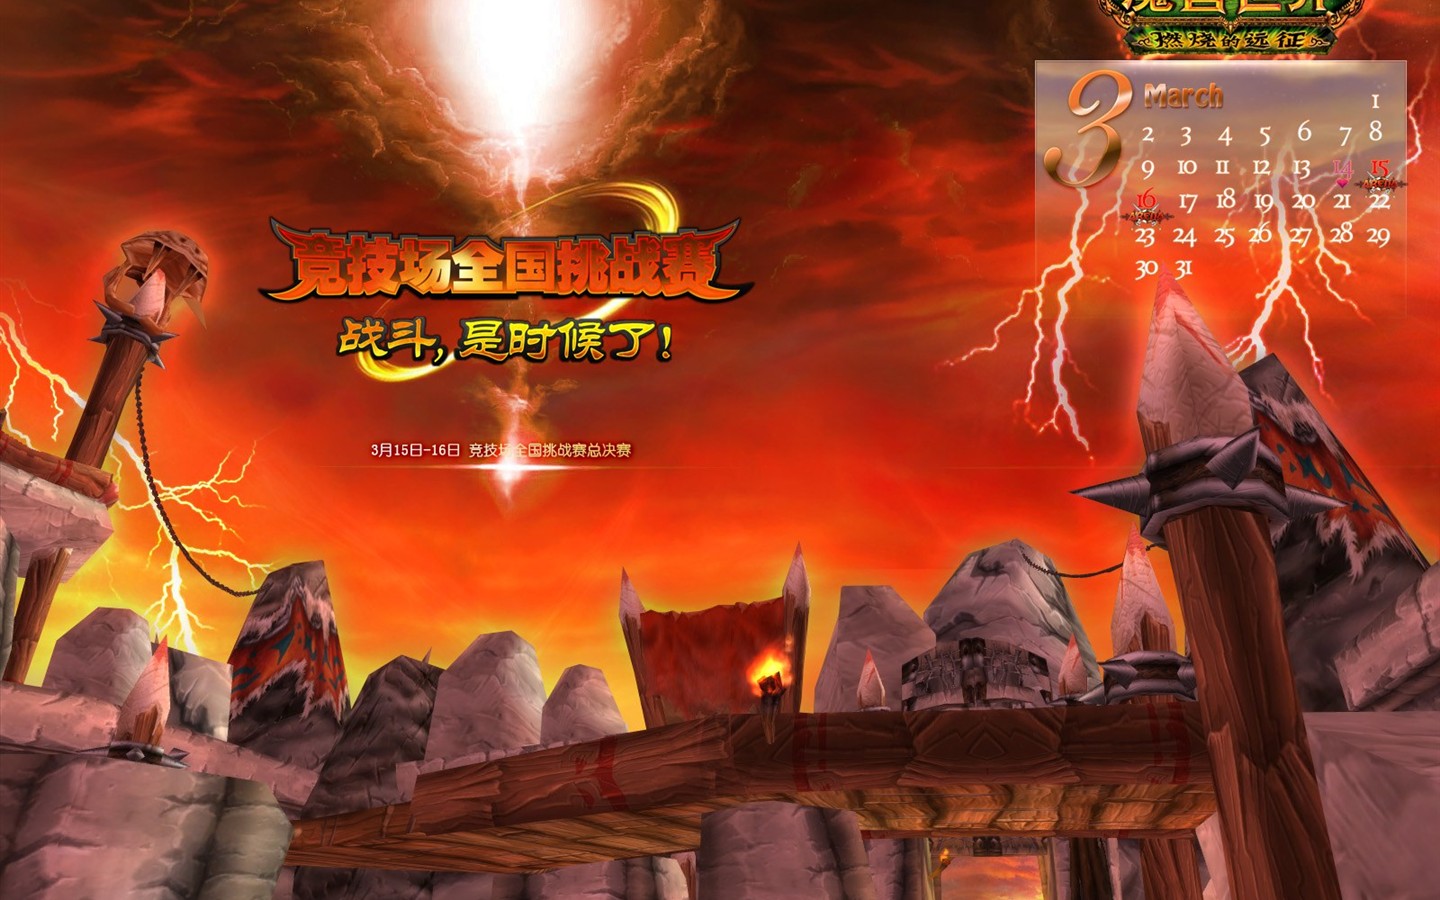 World of Warcraft: Fond d'écran officiel de Burning Crusade (2) #16 - 1440x900